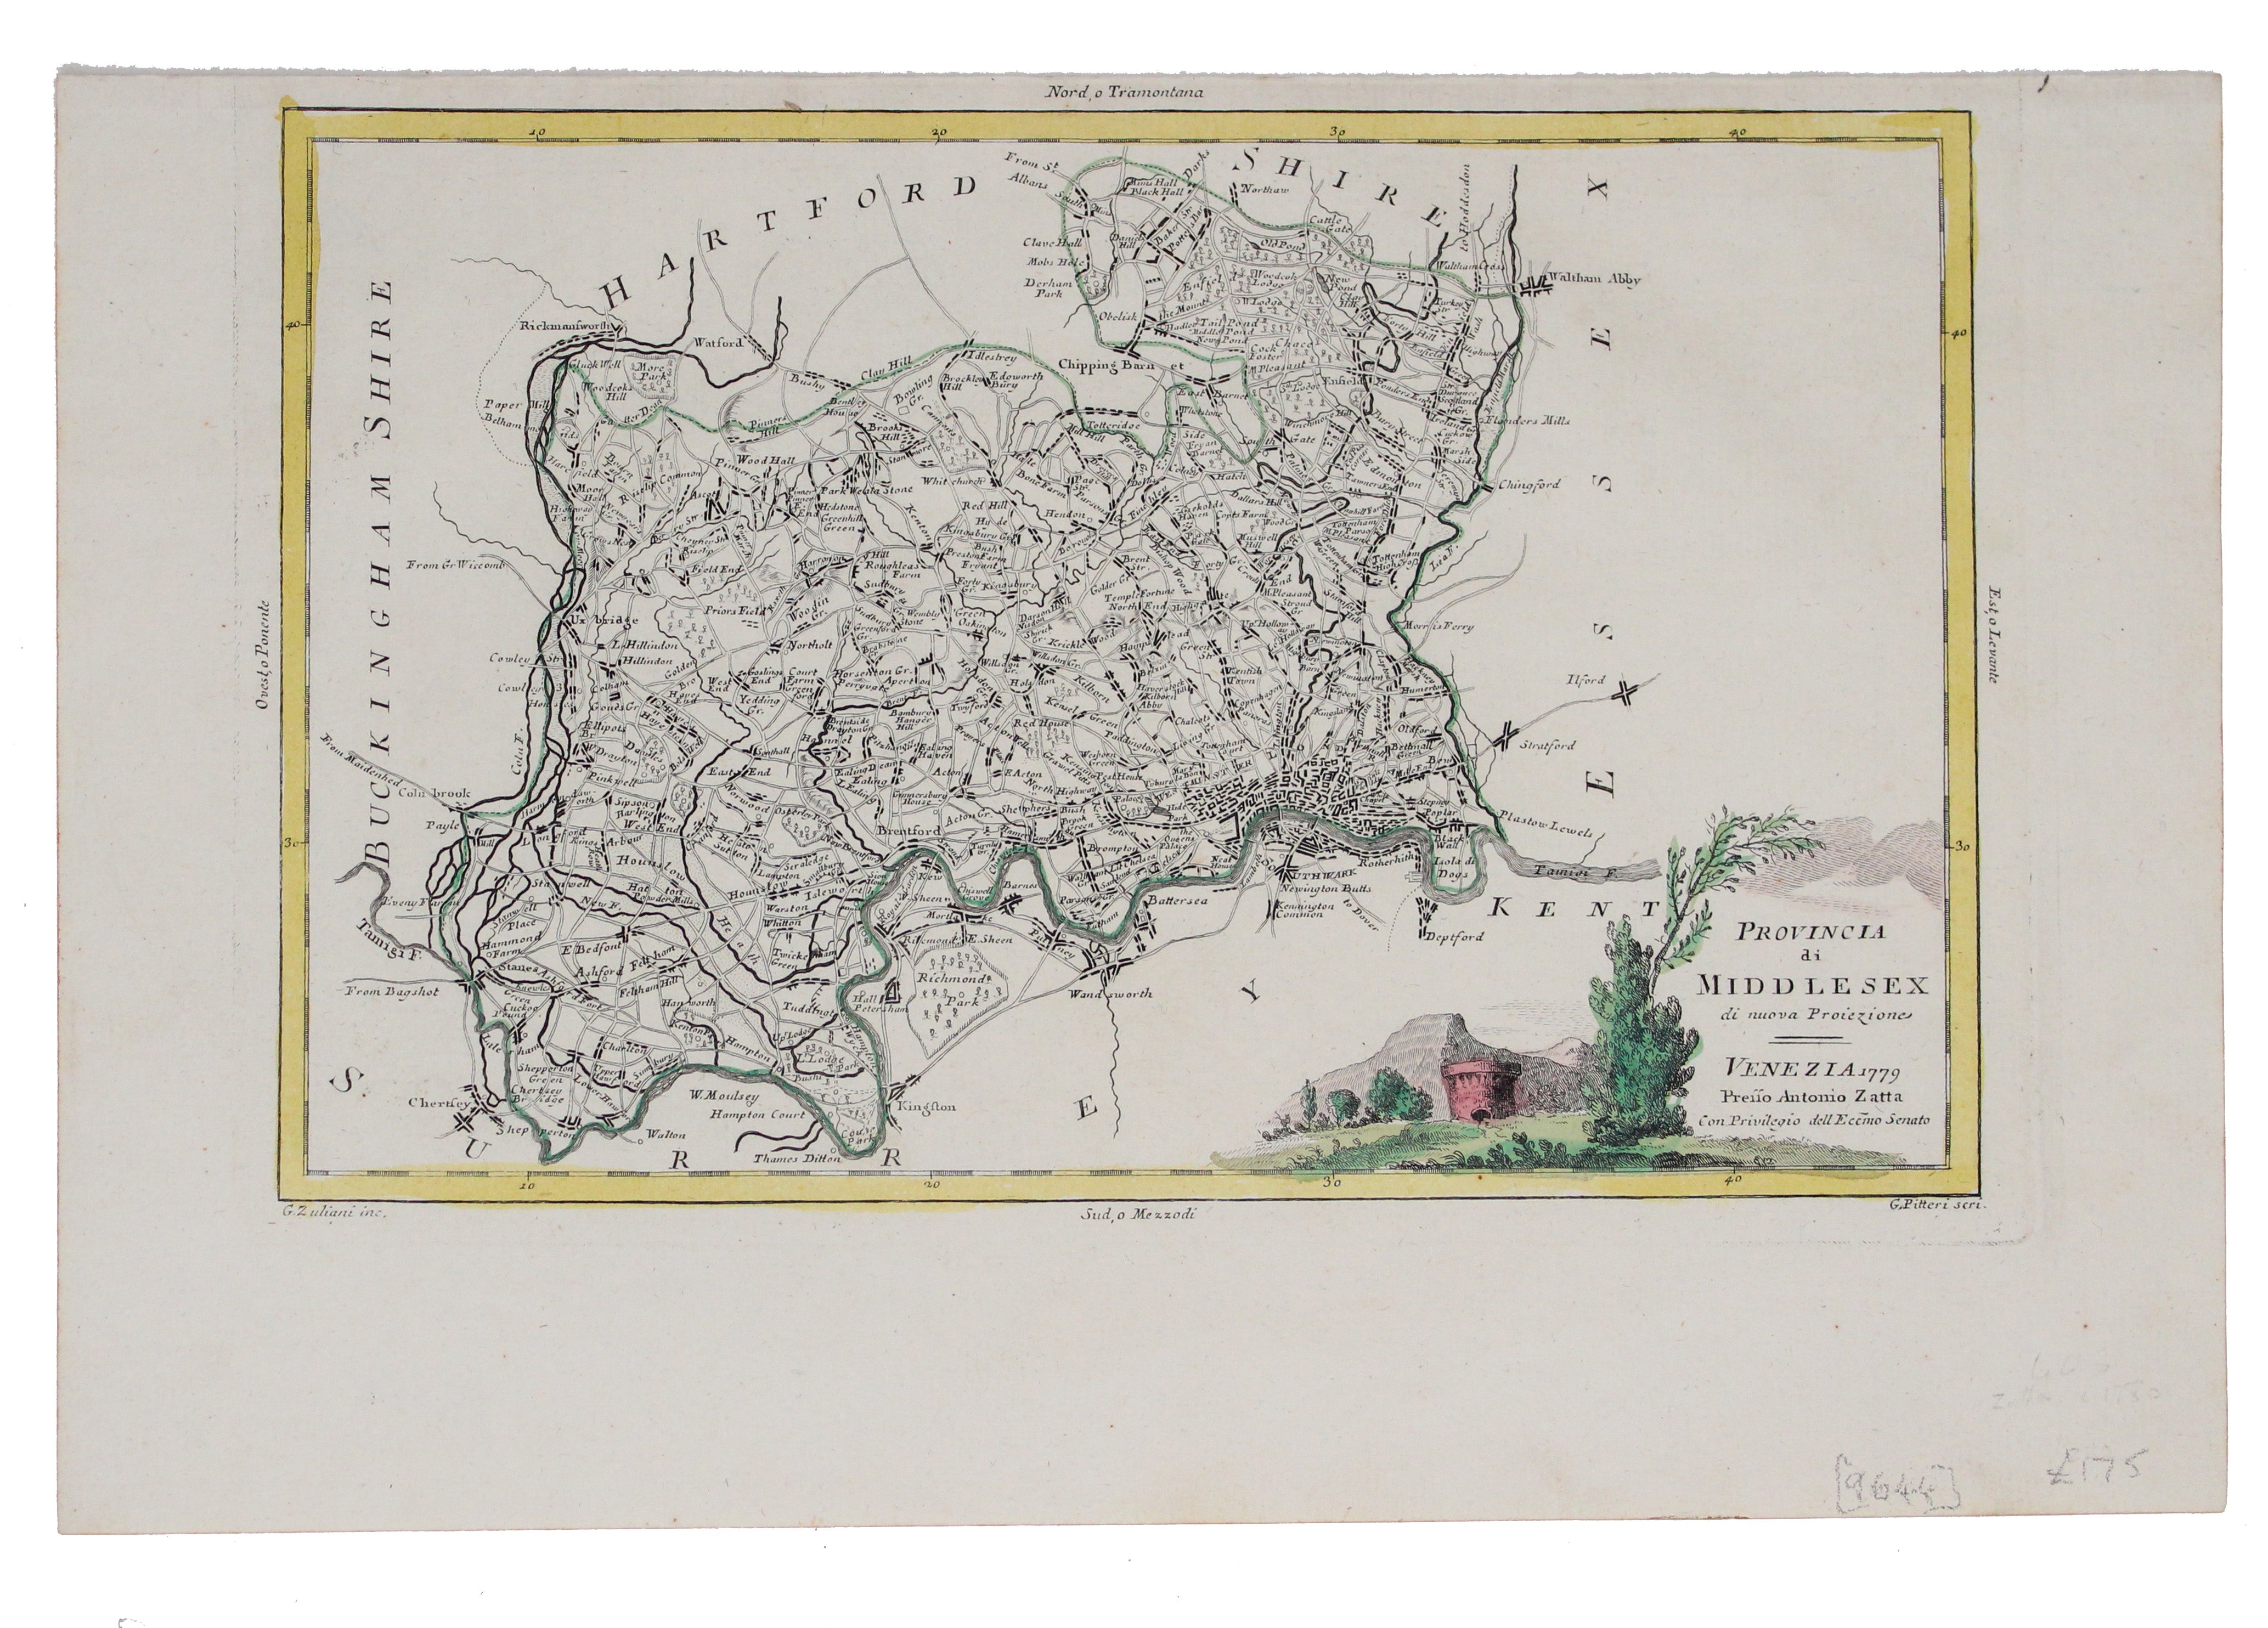 Zatta's Map of Middlesex